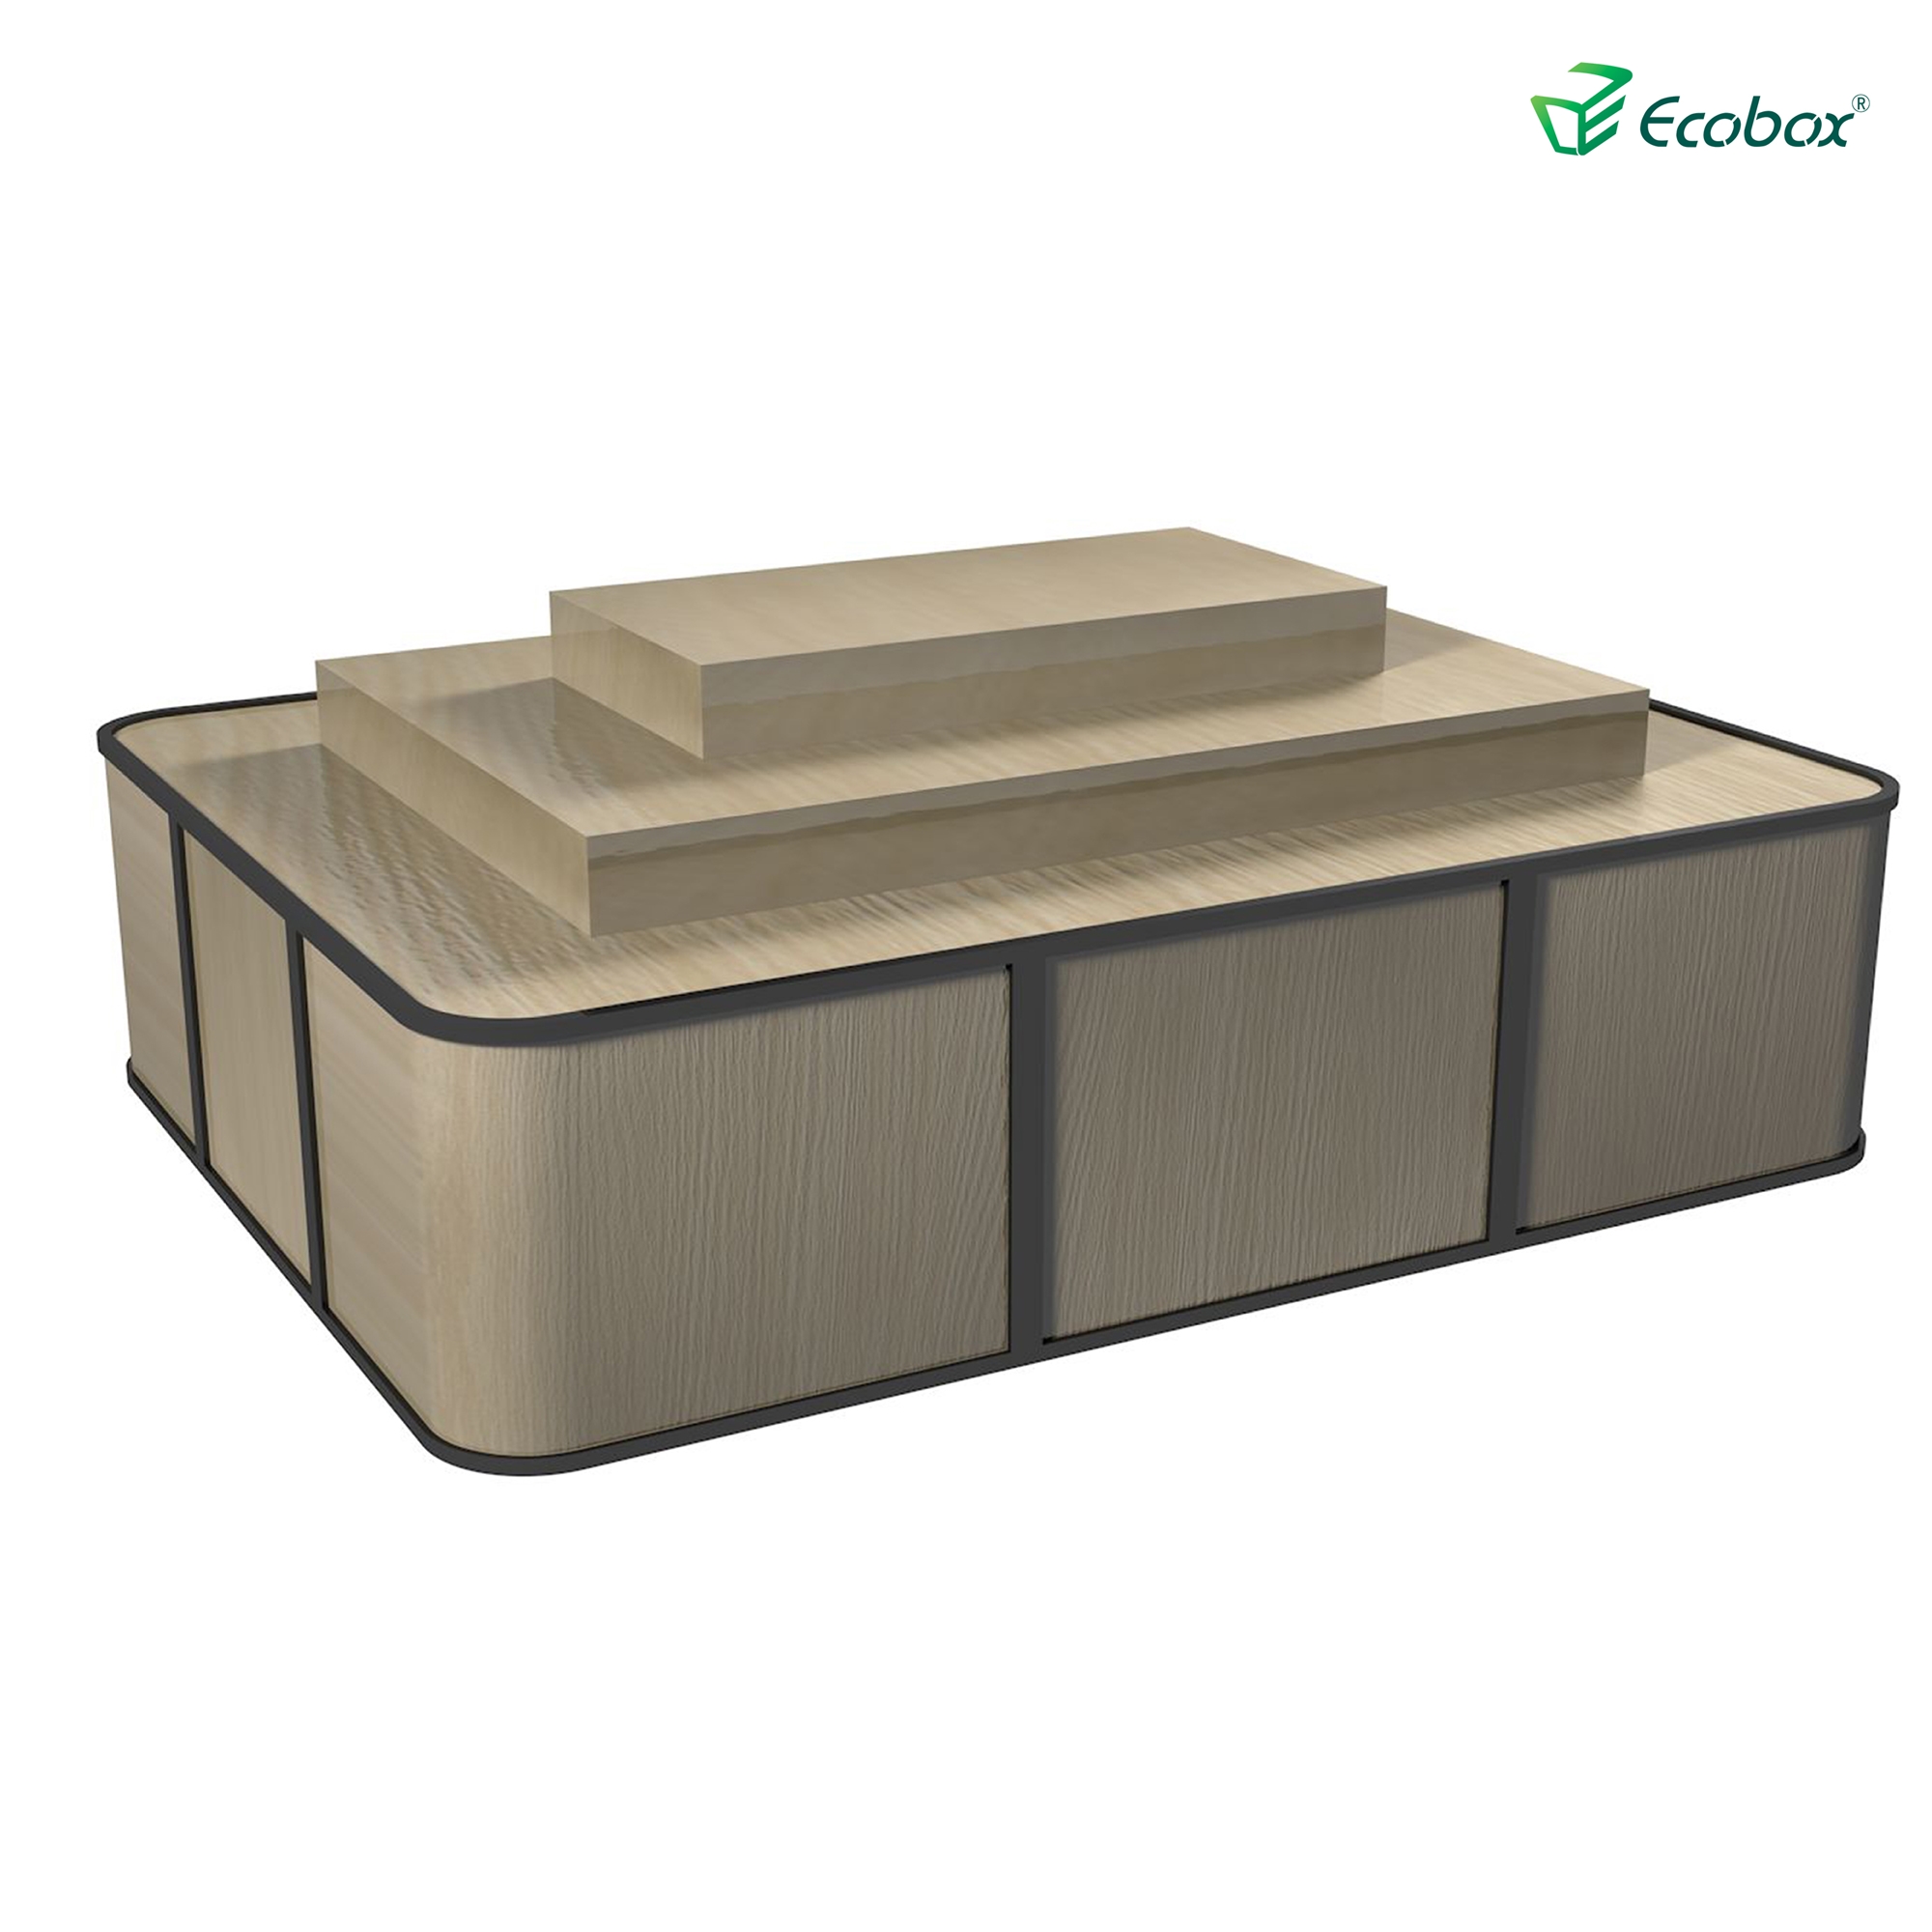 Ecobox G004 series shelf with Ecobox bulk bins supermarket bulk food displays